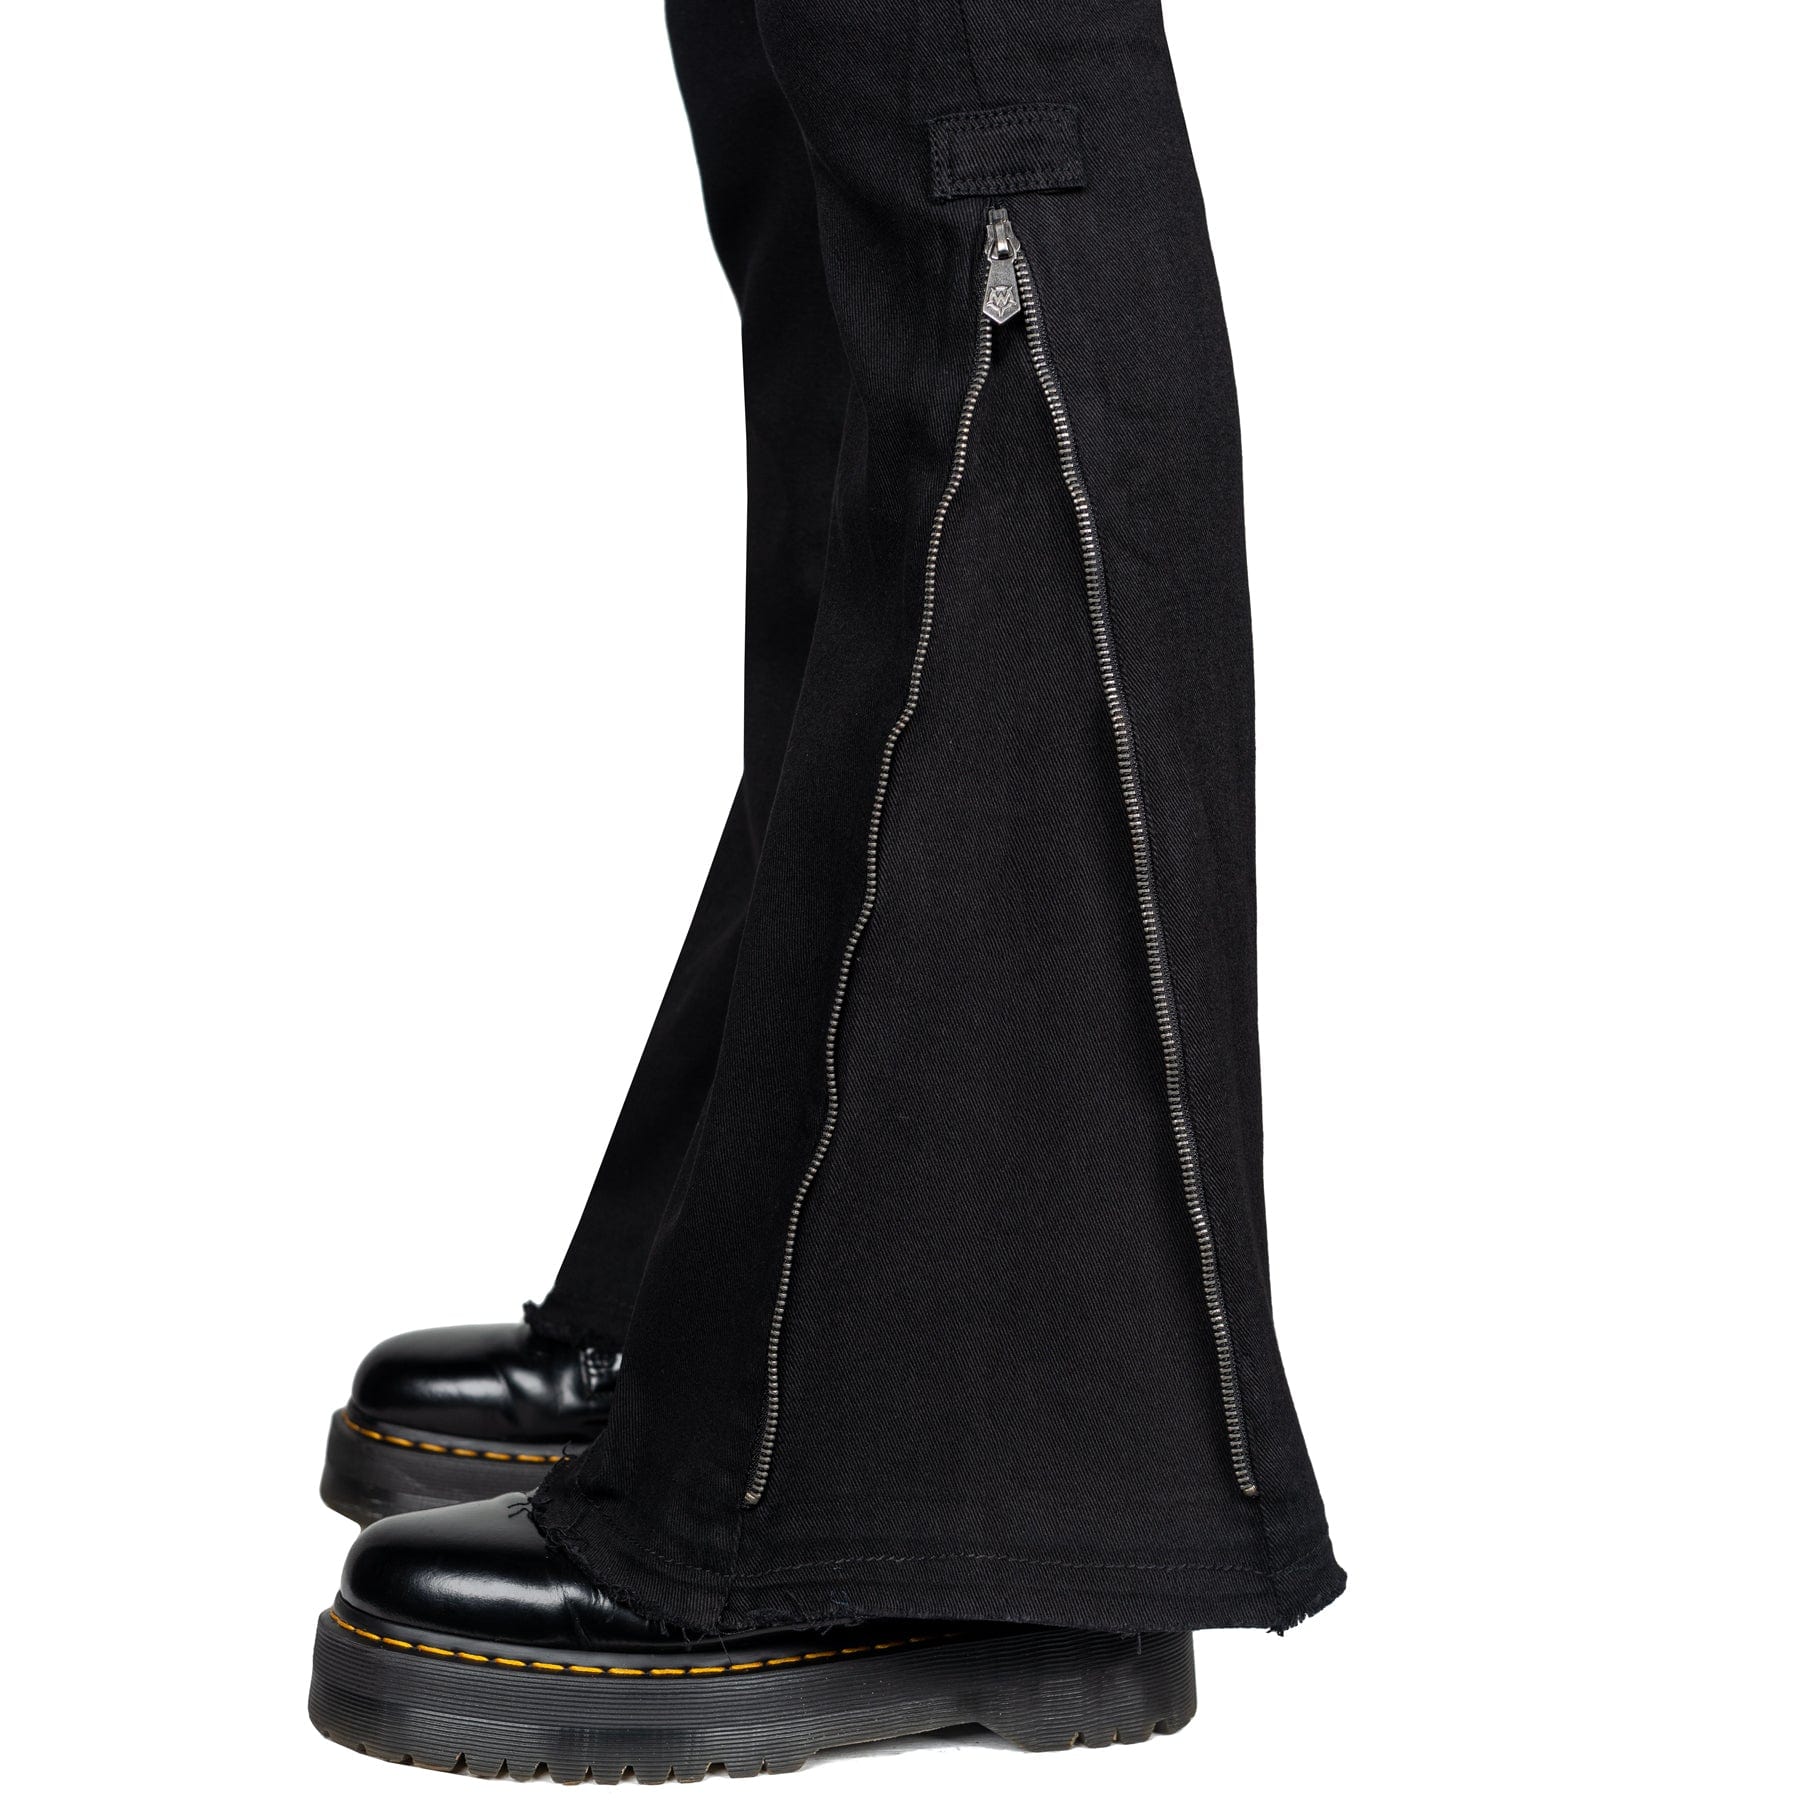 Wornstar Clothing Pants Hellraiser Side Zipper Mens Jeans - Black